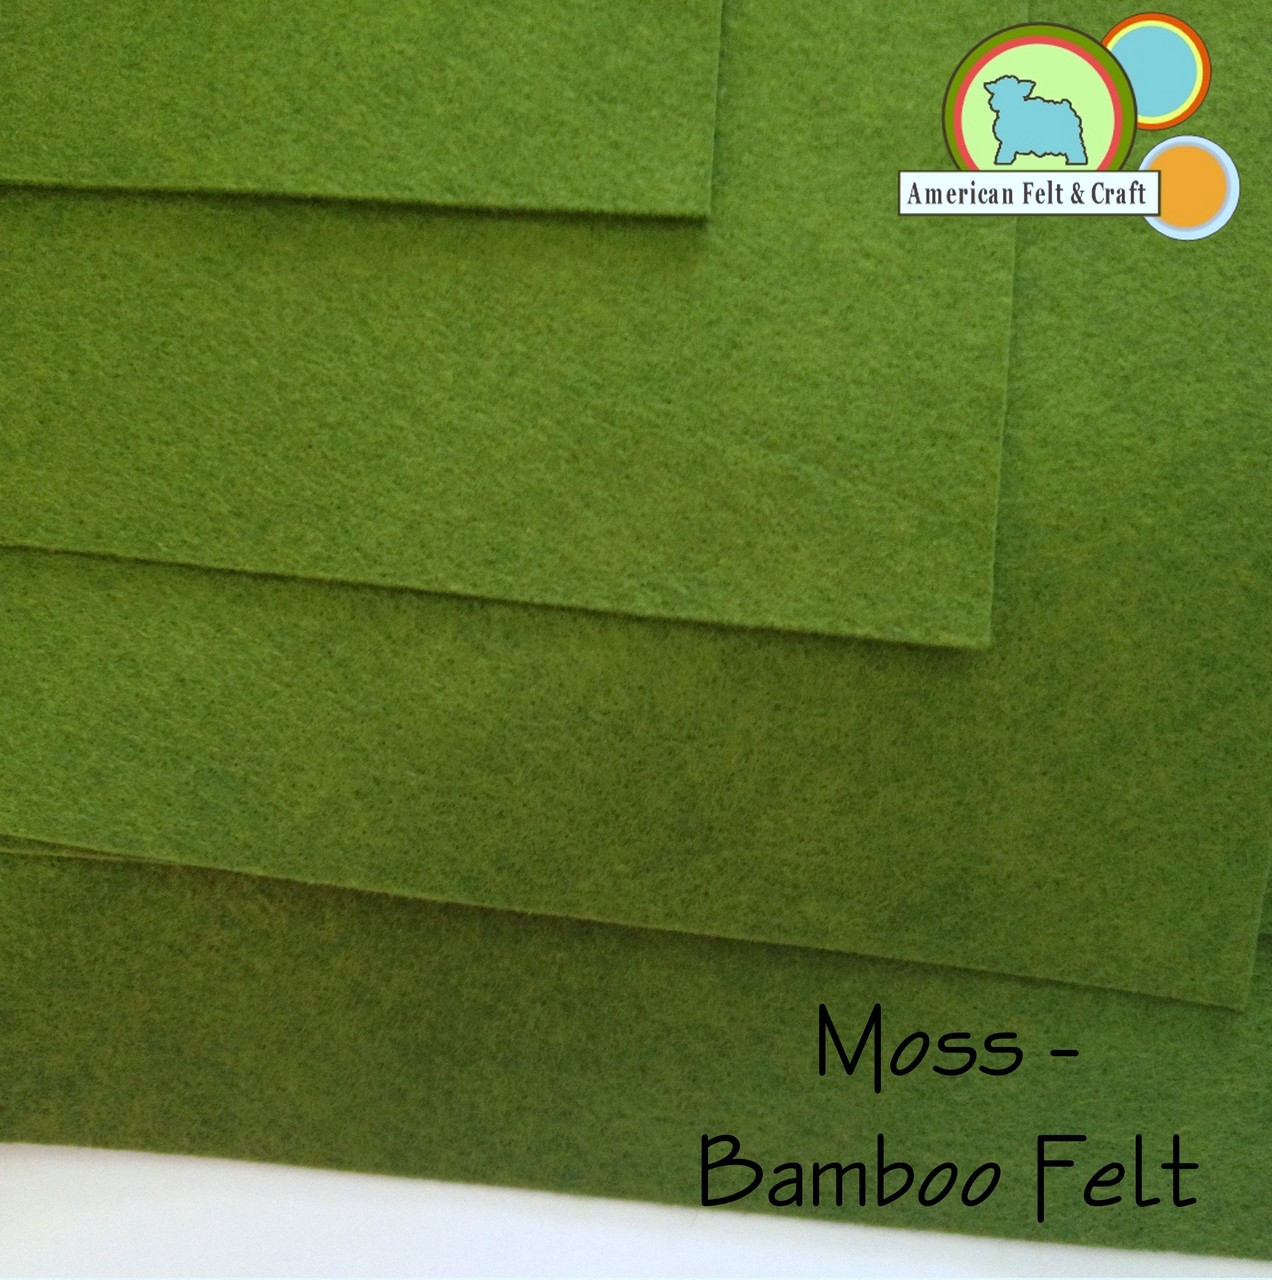 Moss - Bamboo Felt - American Felt & Craft